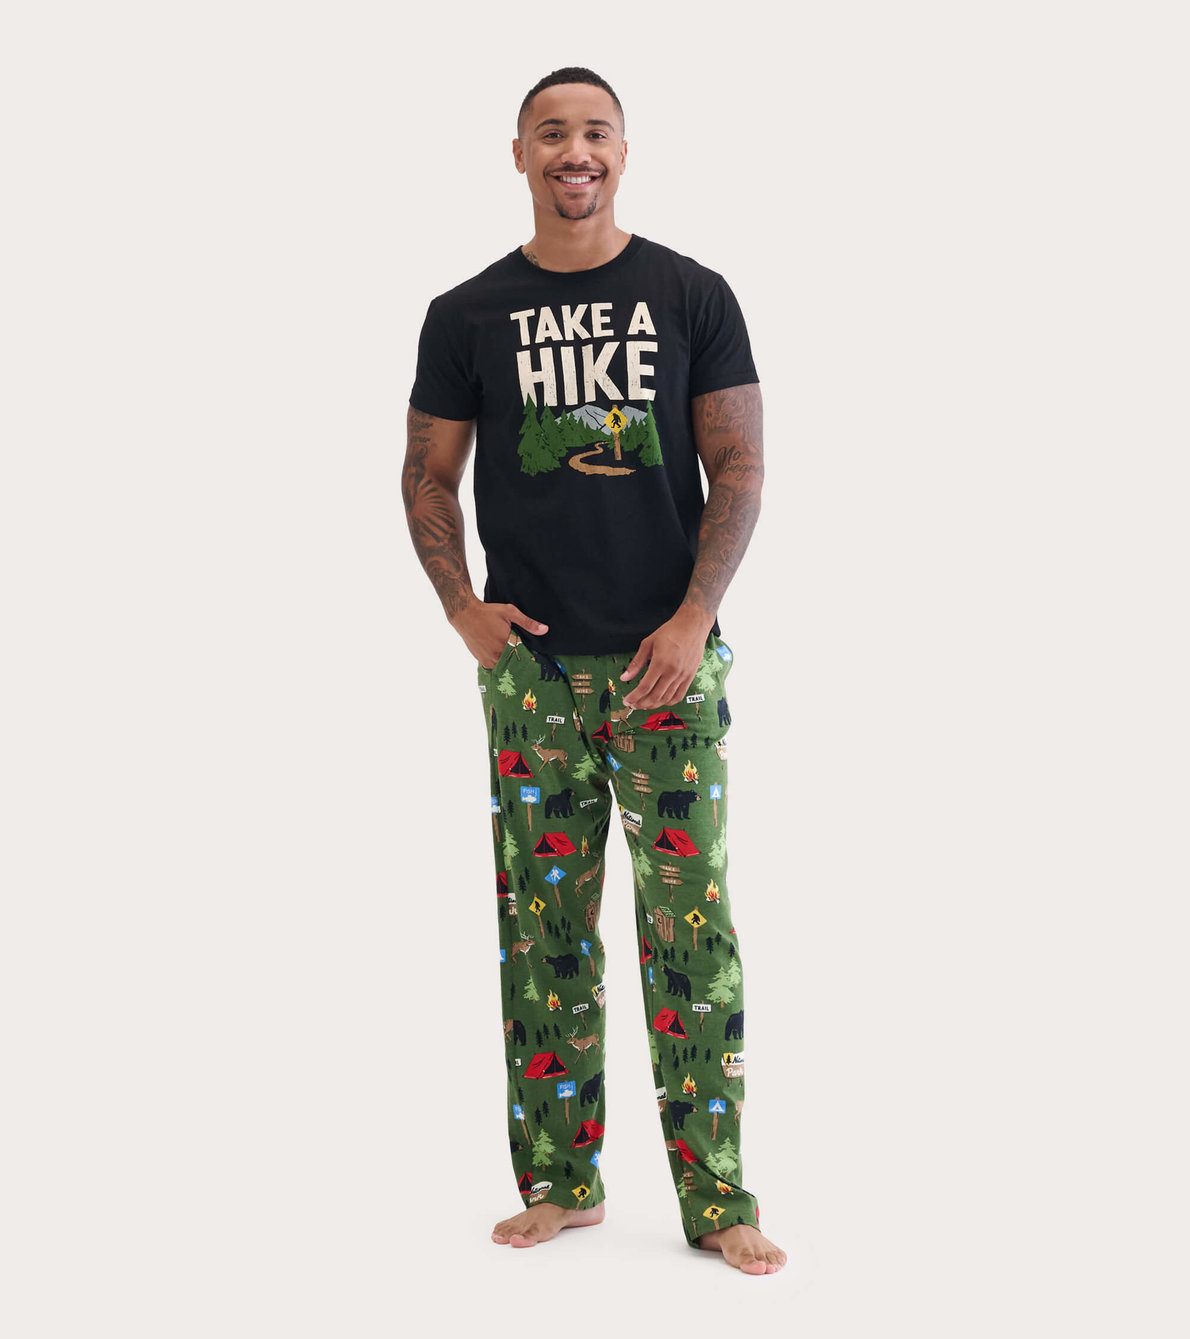 View larger image of Take a Hike Men's Tee and Pants Pajama Separates